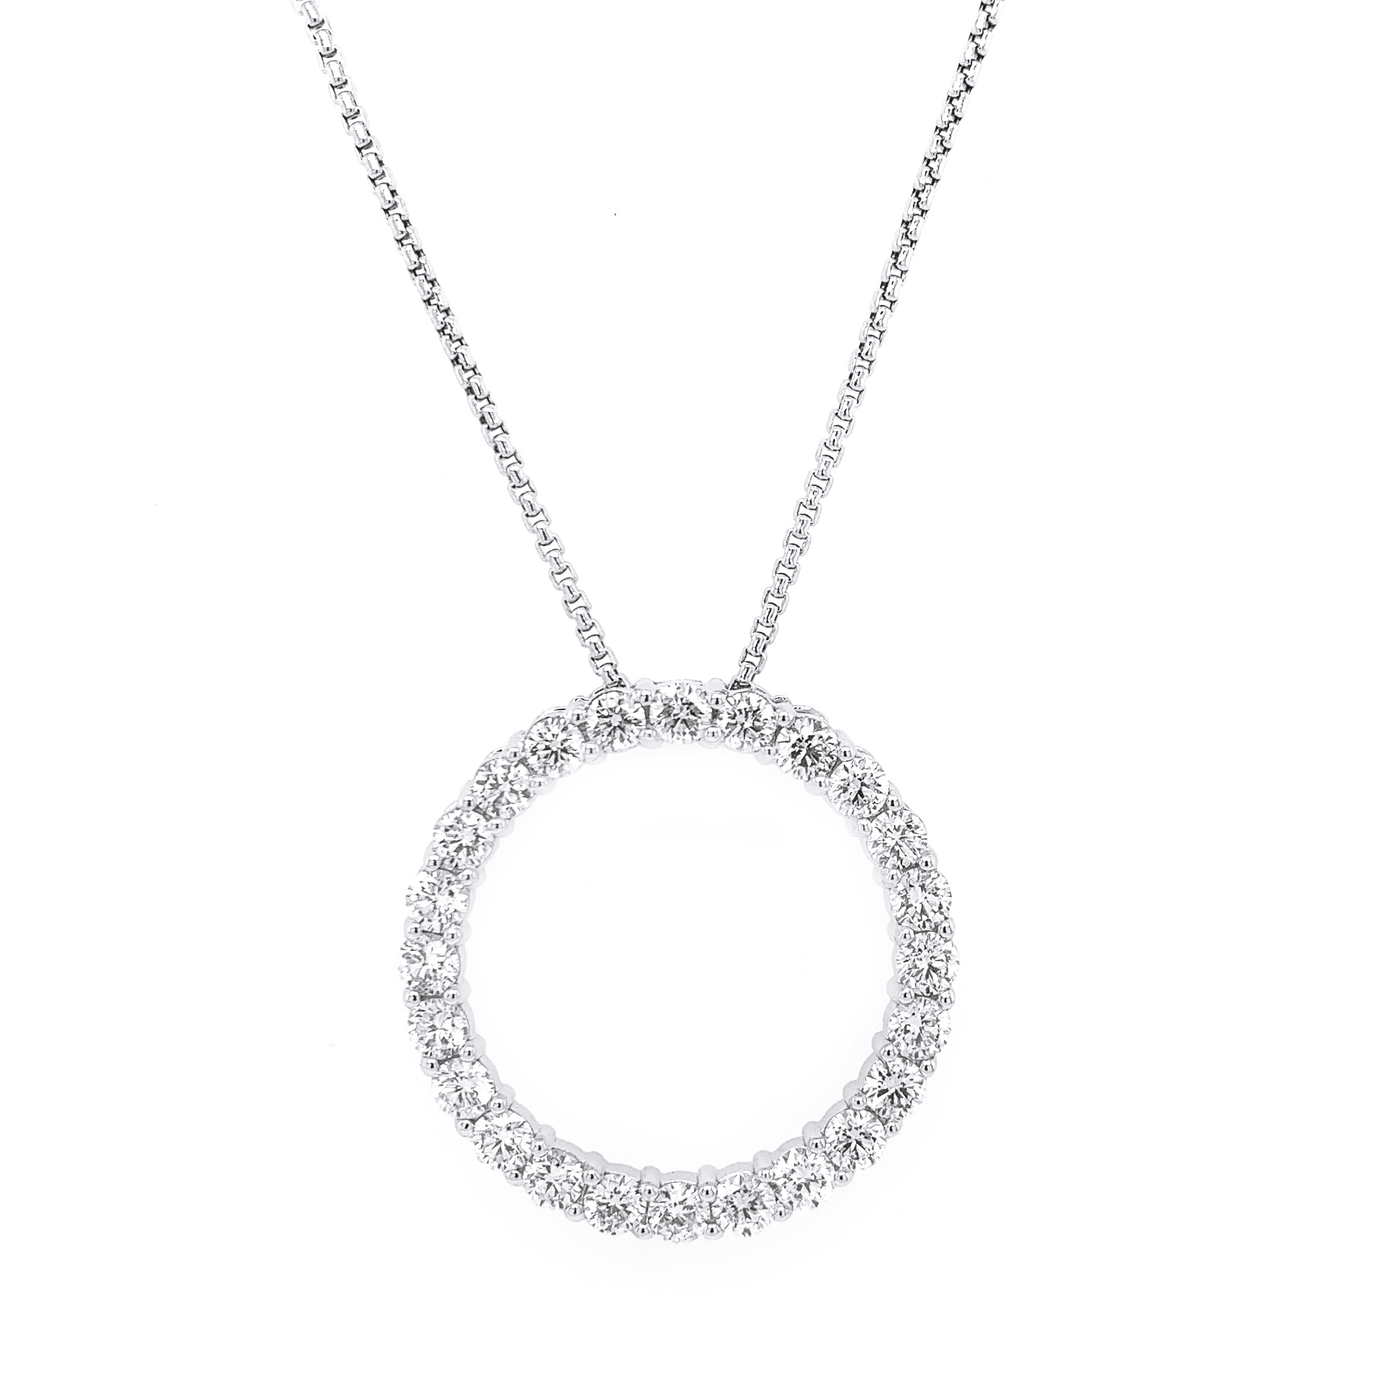 3ct Circle of Life Diamond Necklace